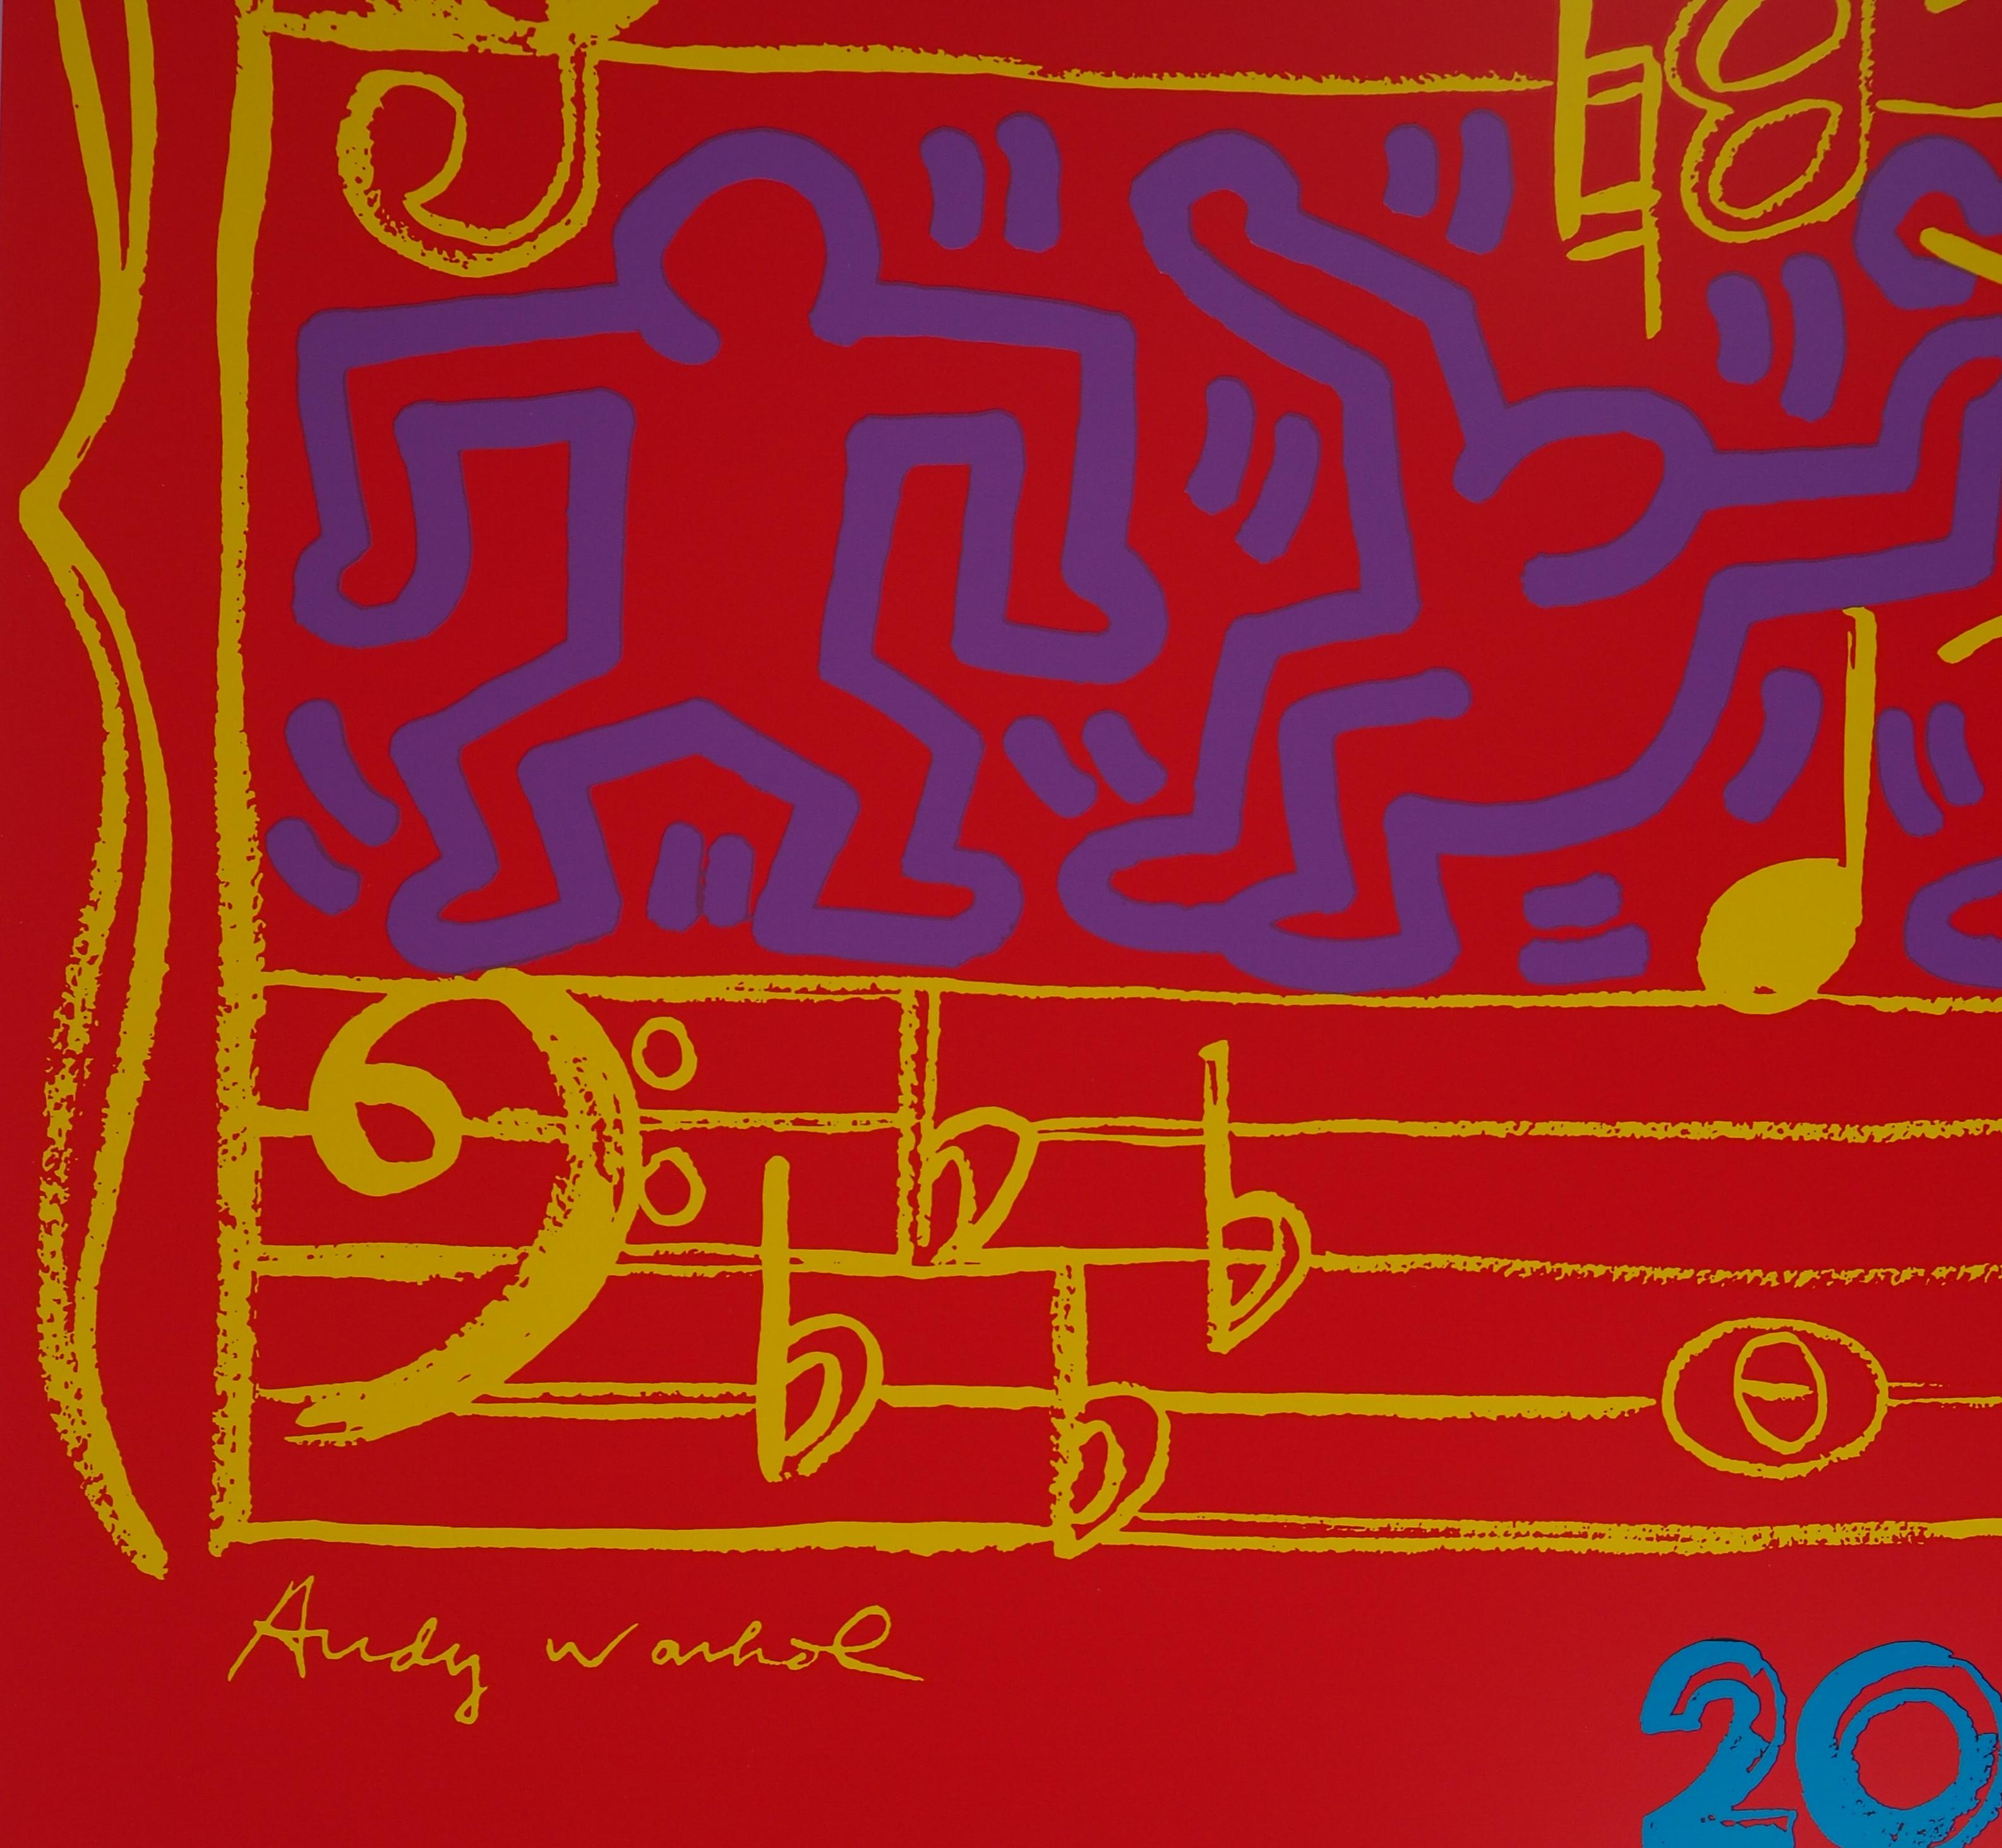 WARHOL & HARING - Jazz, Dancing on Music Sheet - Screenprint Poster, Montreux - Print by Andy Warhol